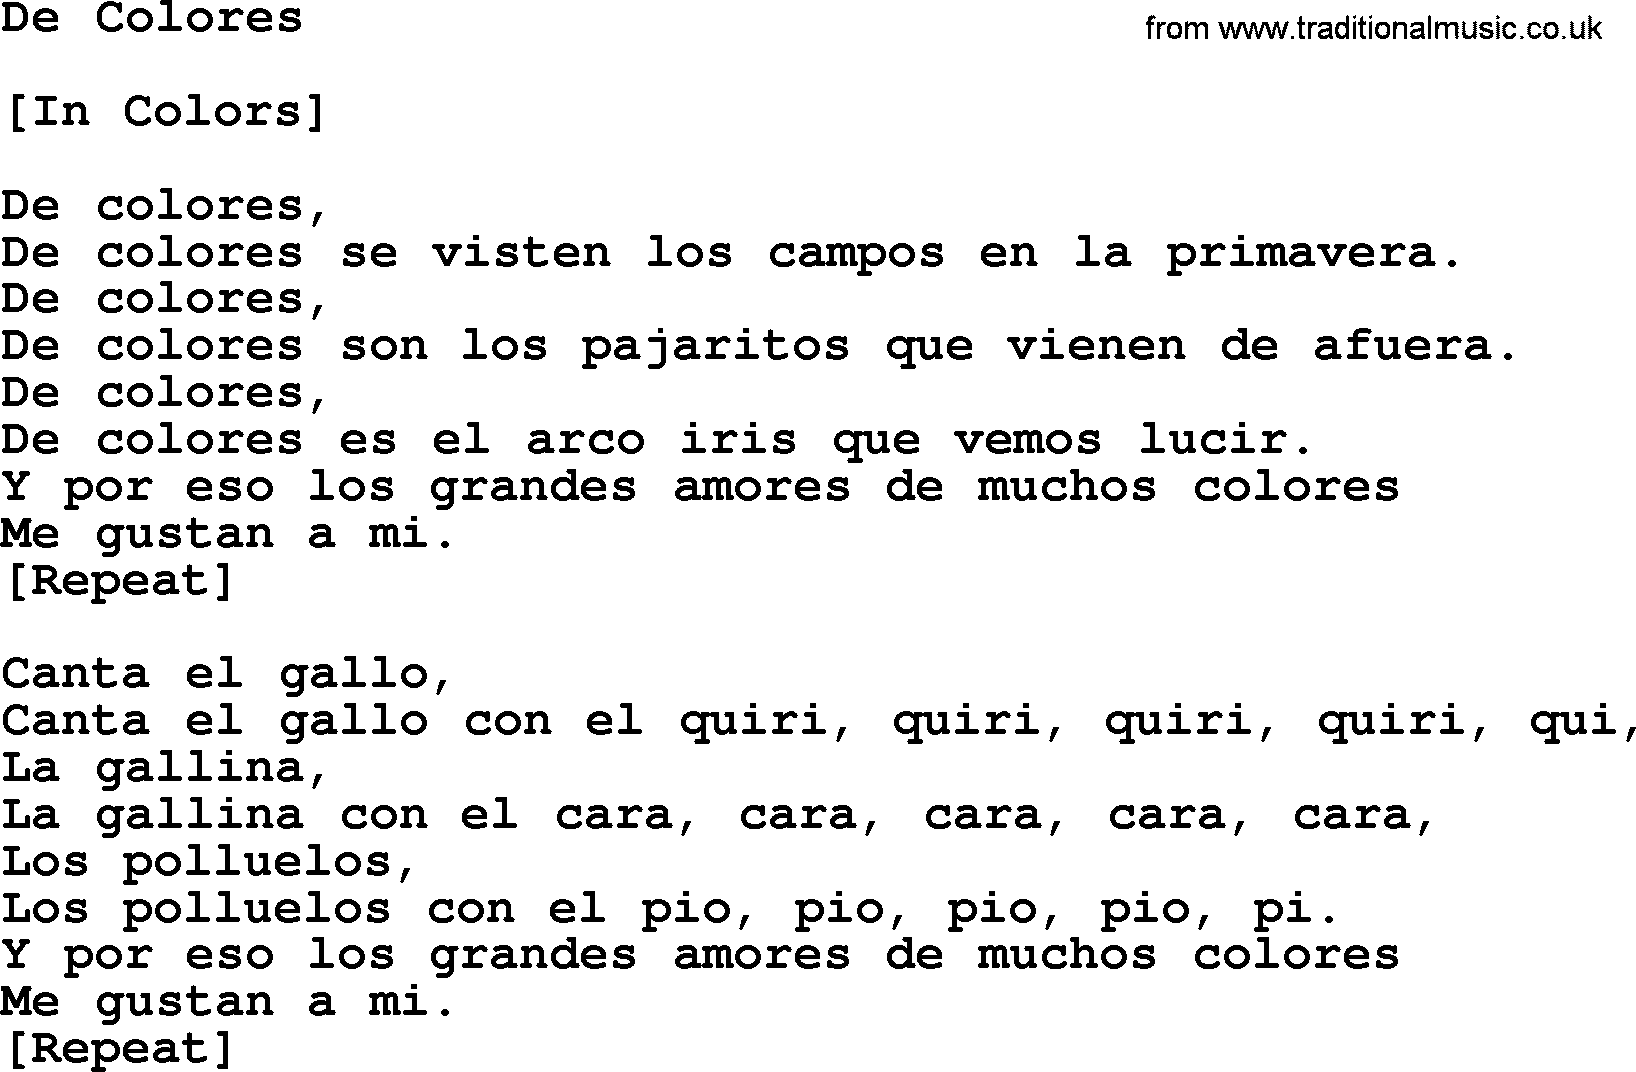 Joan Baez song De Colores, lyrics